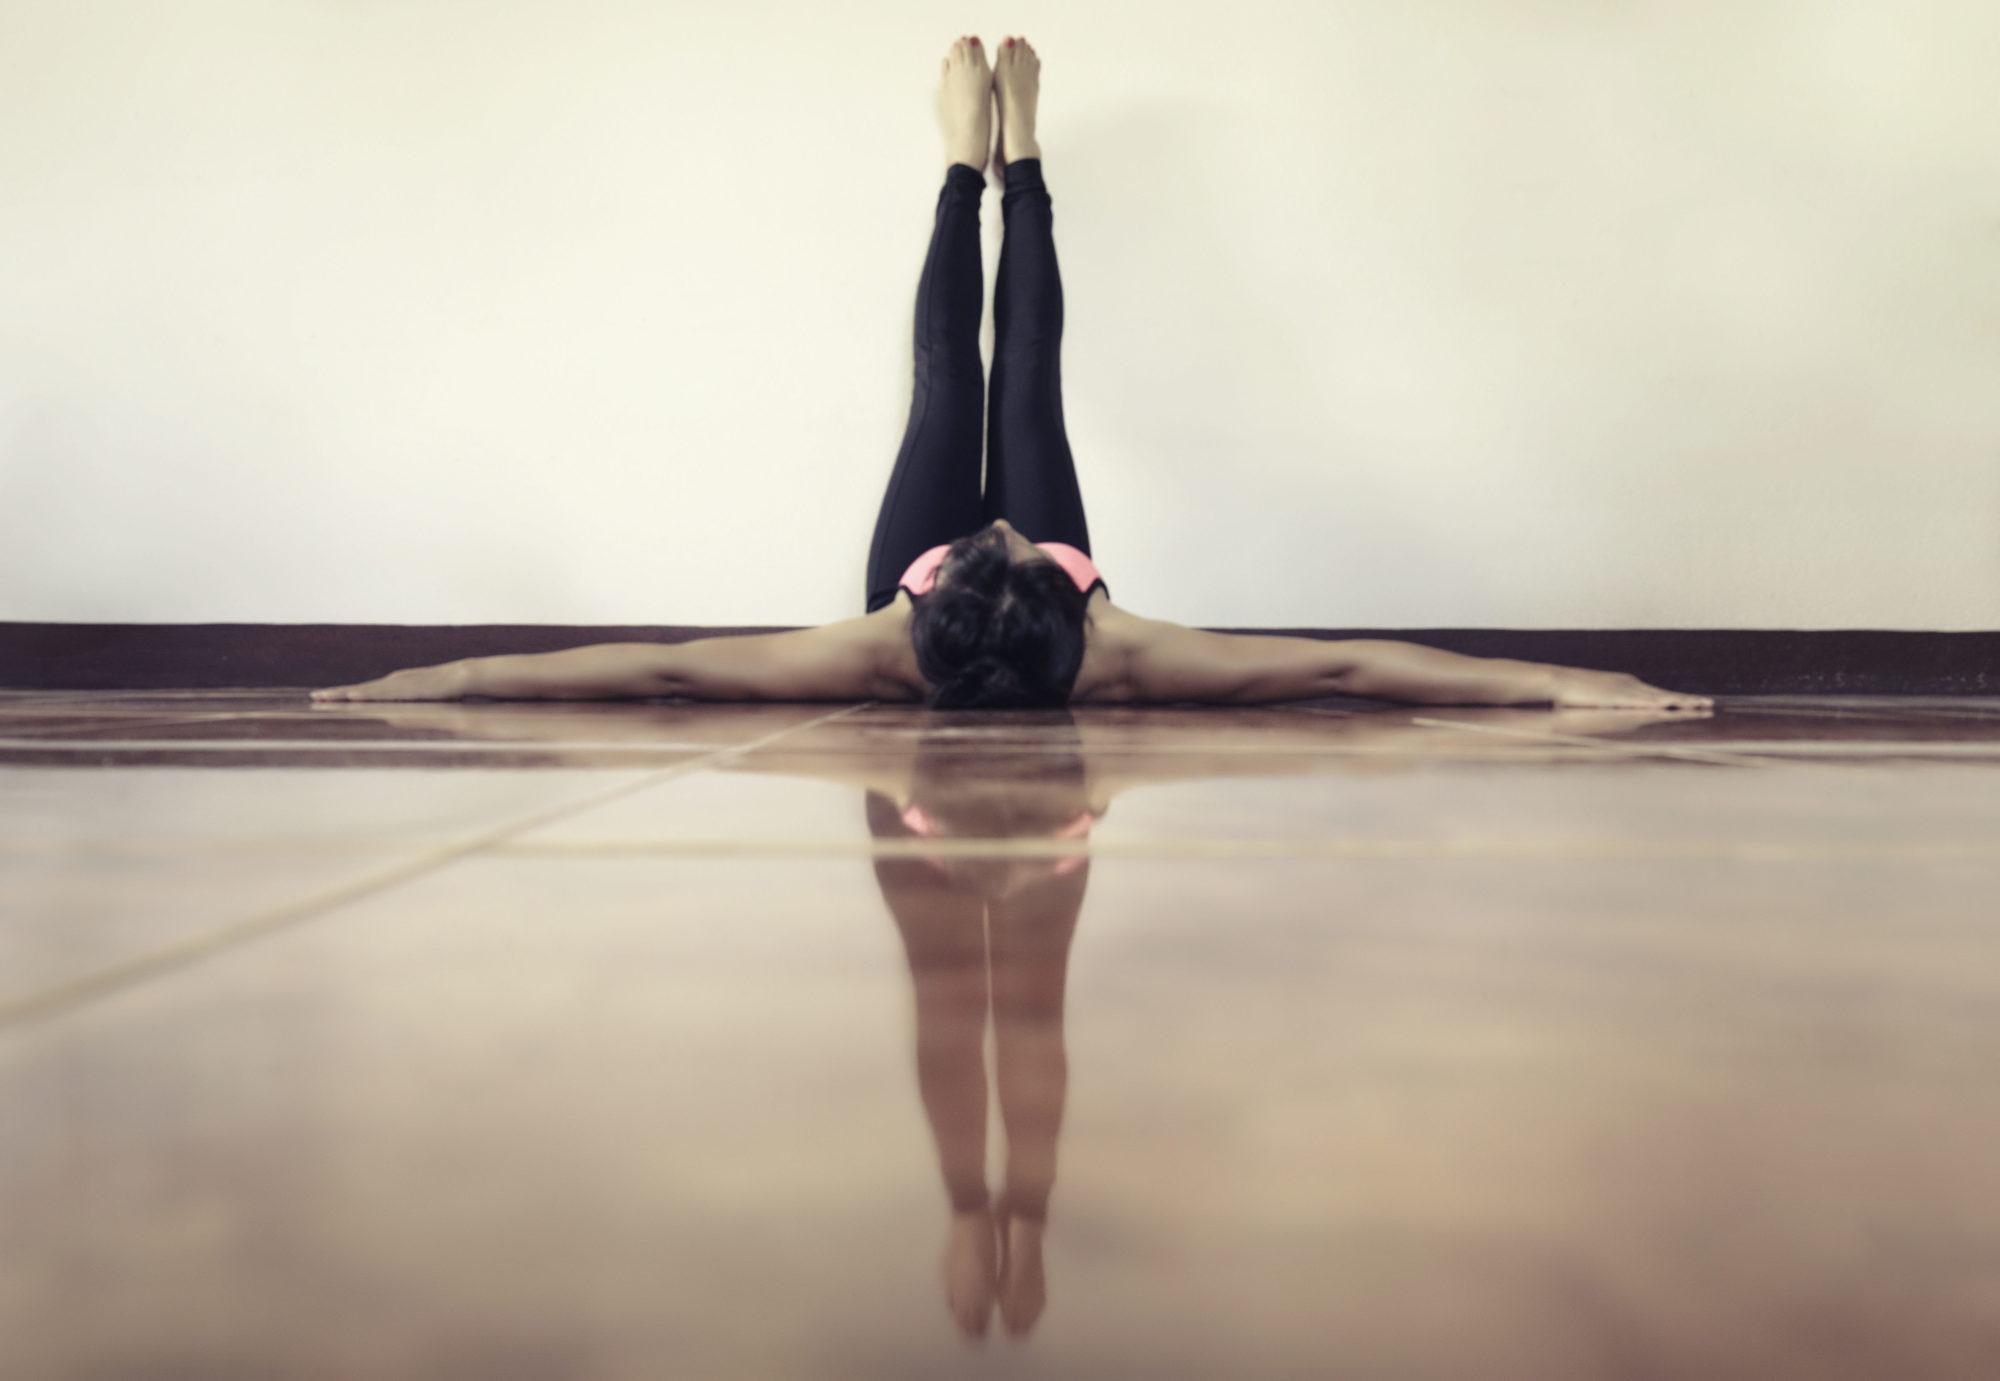 Legs up the wall pose / Inverted Lake Pose (Sanskrit terms: Viparita Karani)  - Better Day Yoga